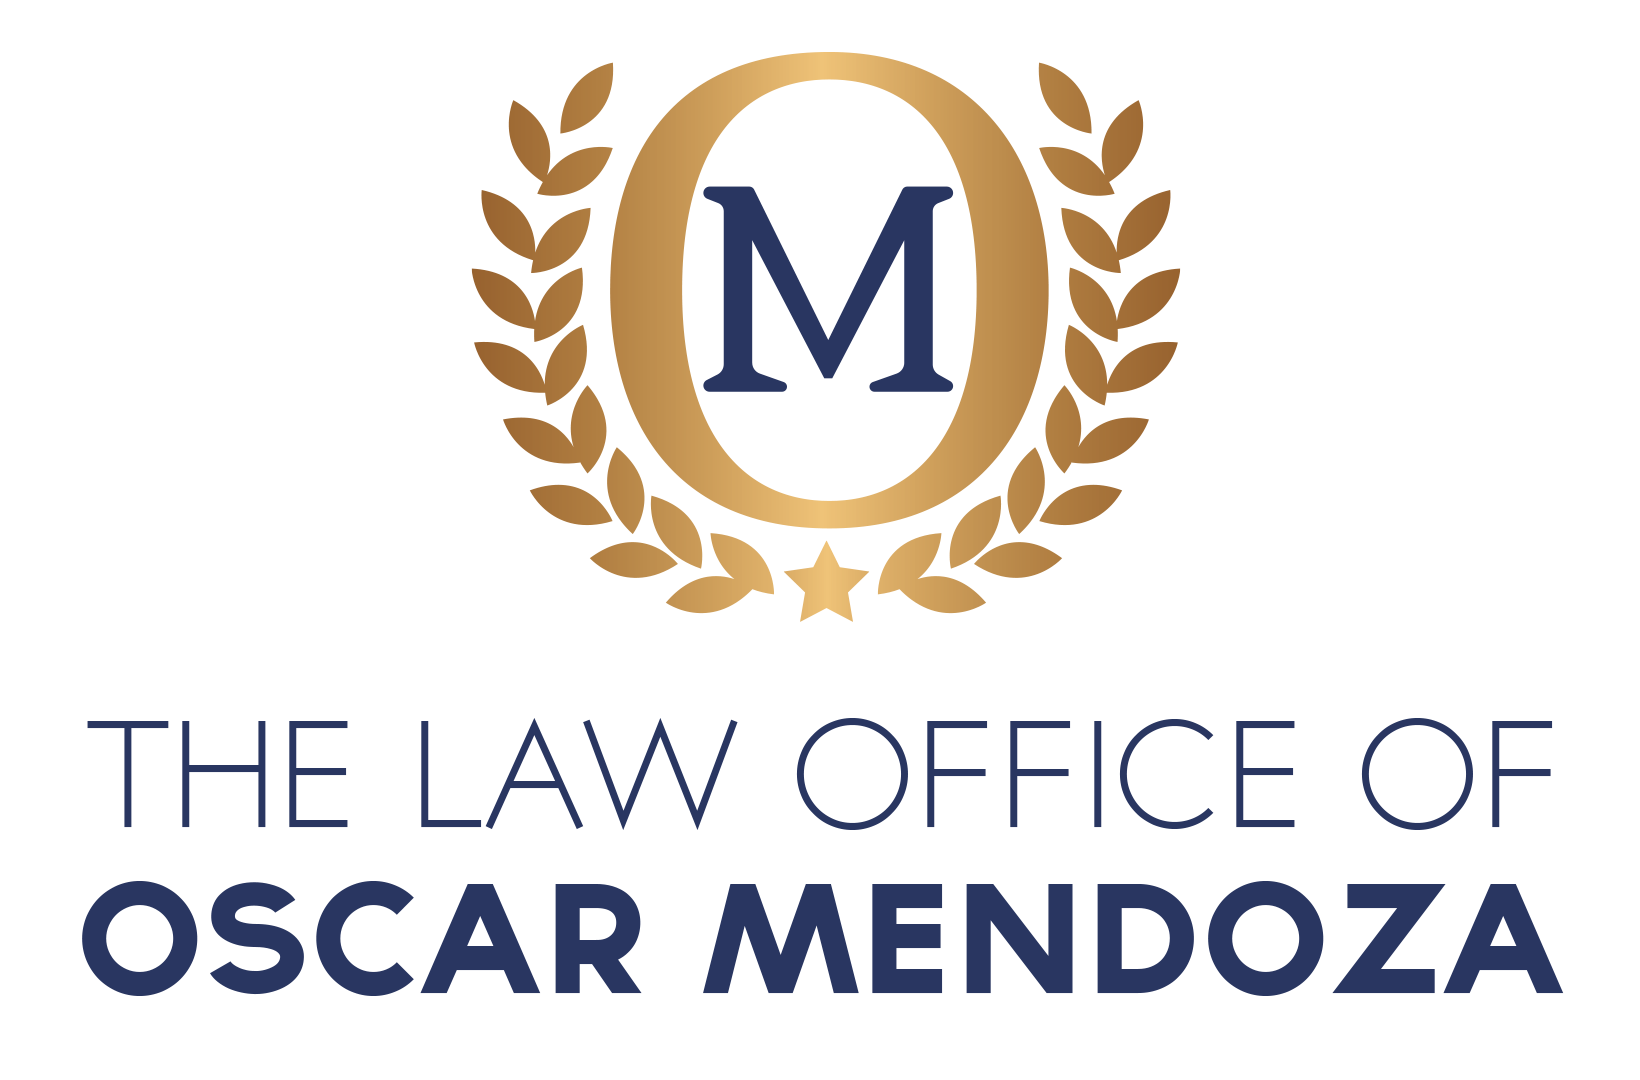 The Law Office of Oscar Mendoza